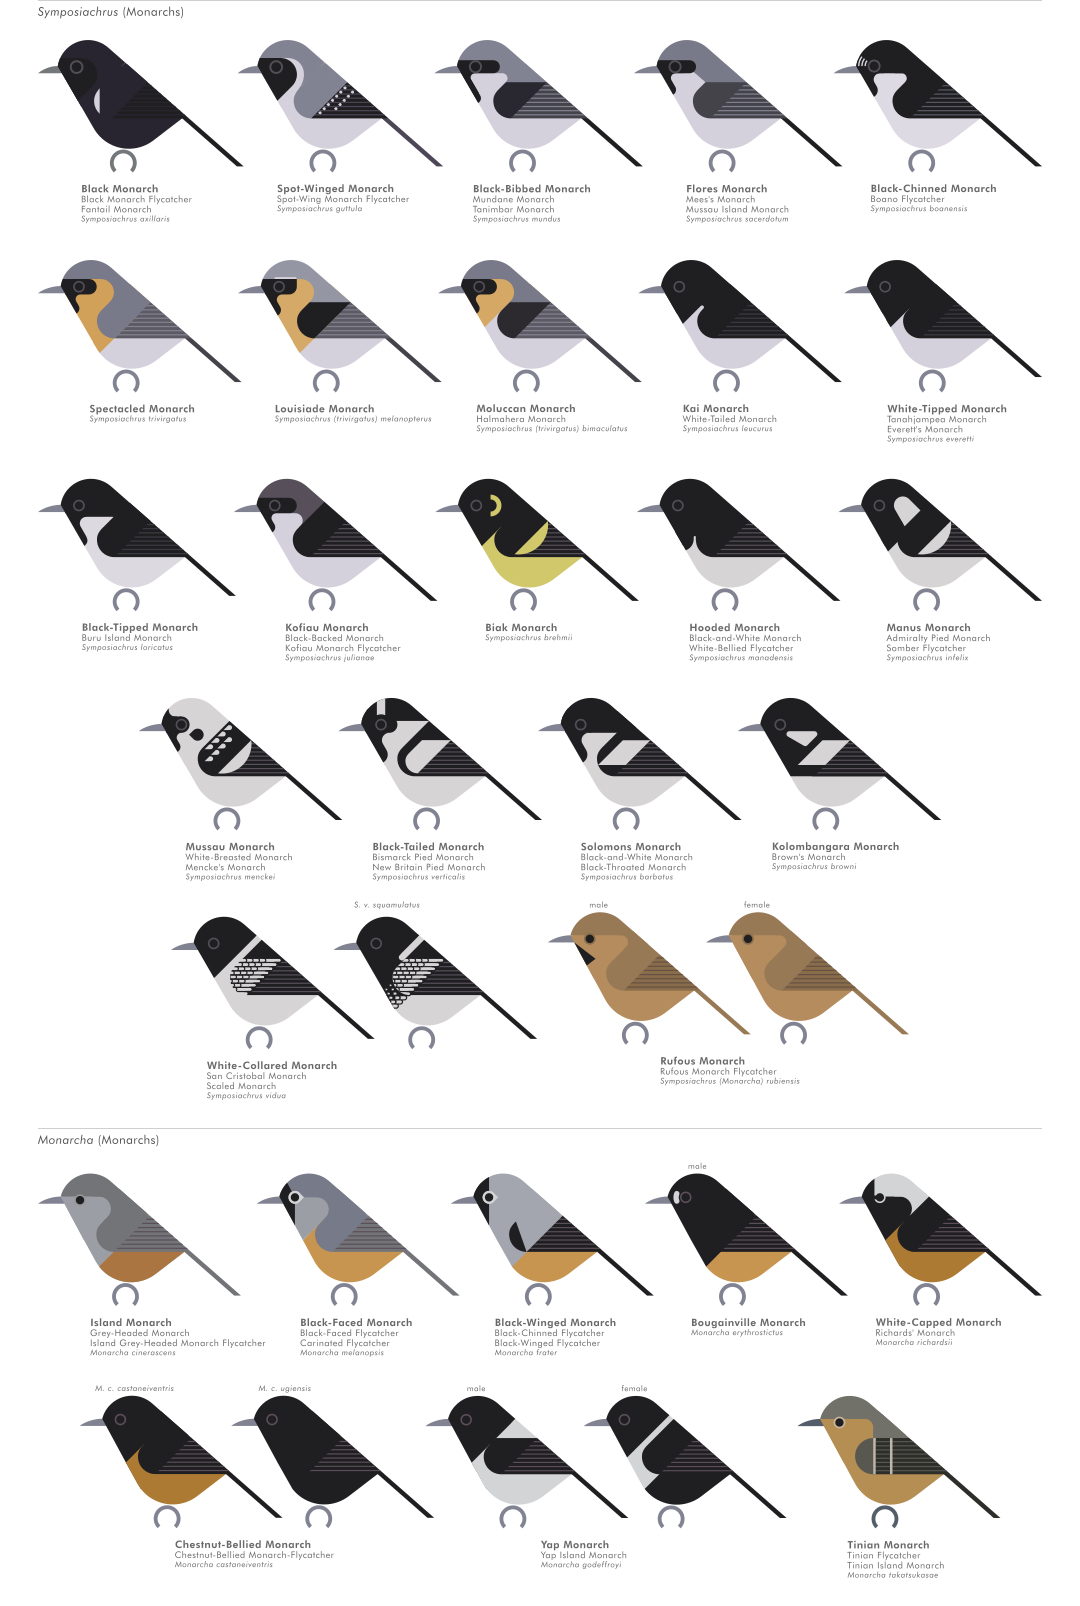 scott partridge - AVE - avian vector encyclopedia - monarch flycatchers - bird vector art